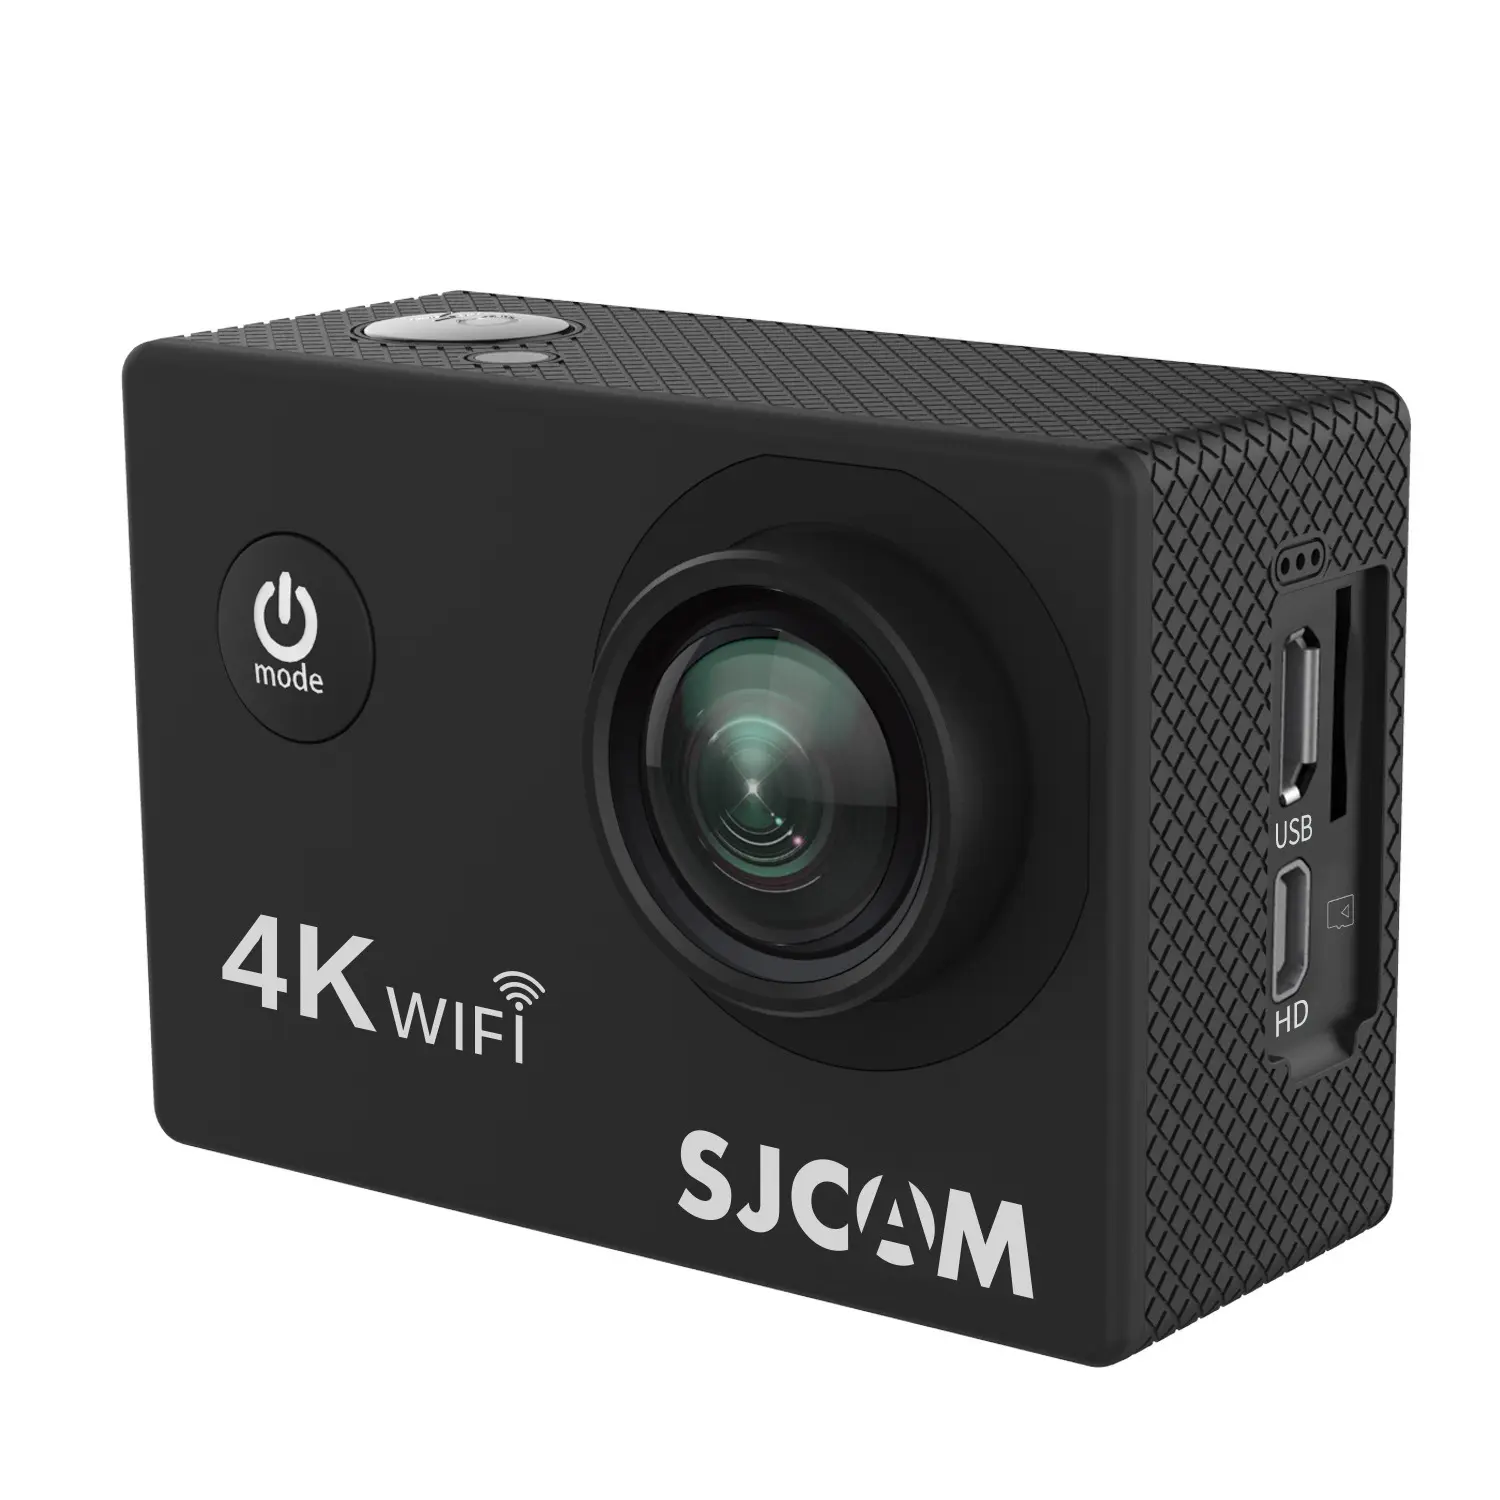 Hot SJCAM SJ4000 AIR Action Camera 4K WiFi Waterproof Full HD 1080P Video Camera 30fps 16MP 170D 1080P Sport Camera